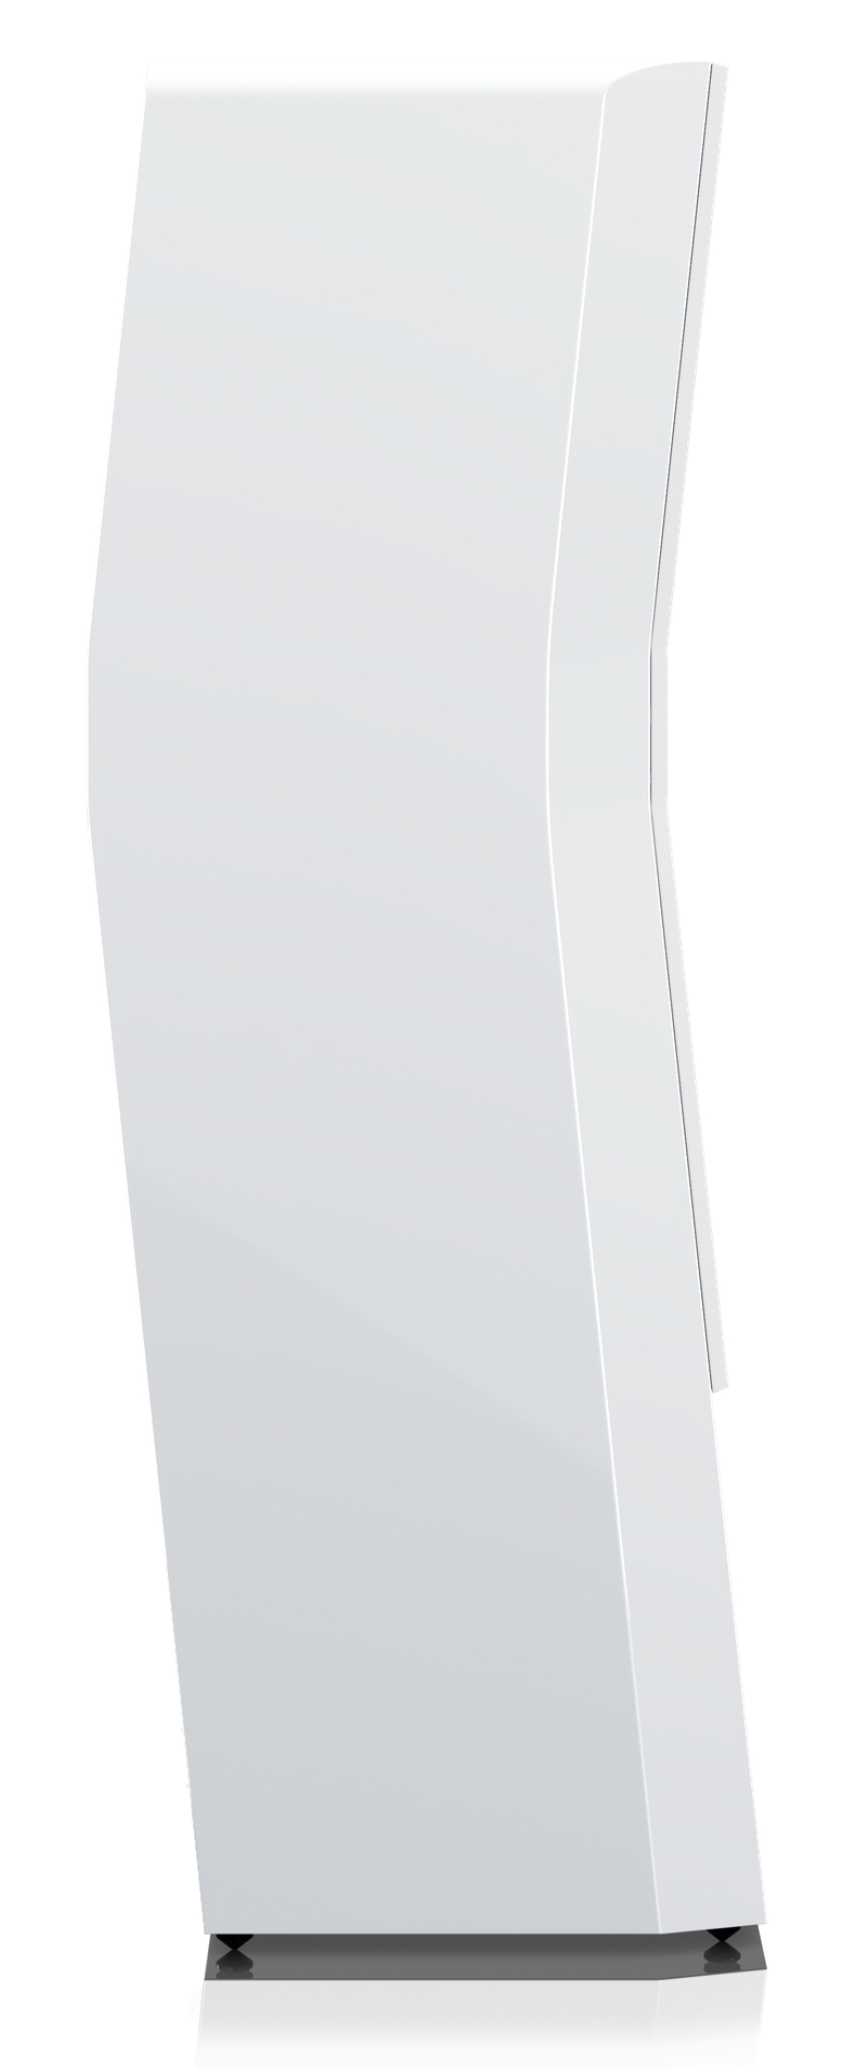 SVS Ultra Evolution Pinnacle Floorstanding Speaker, in Piano White Gloss, individual profile